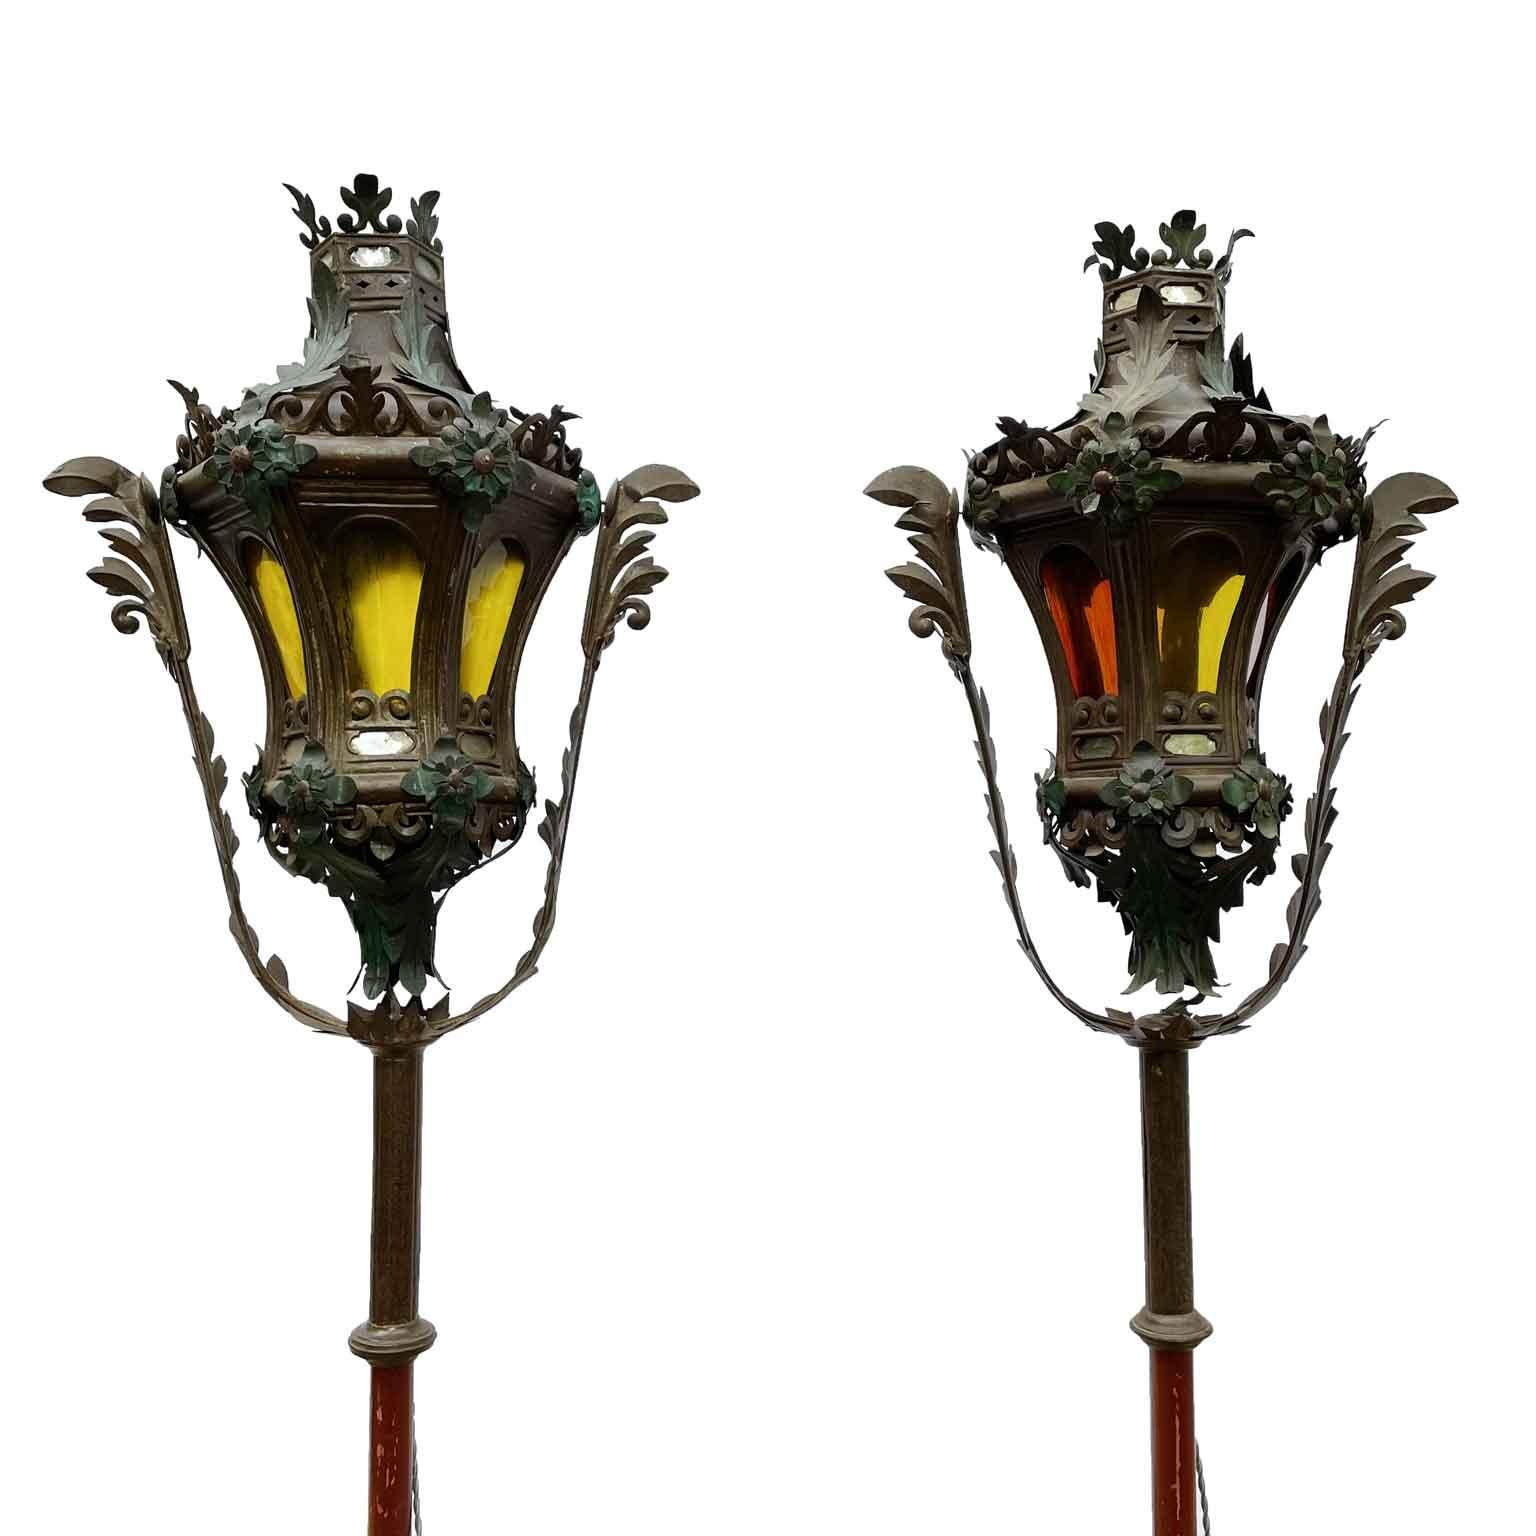 Pair of Venetian Lanterns 19th Century Italian Gondola Lamps Baroque Style For Sale 13